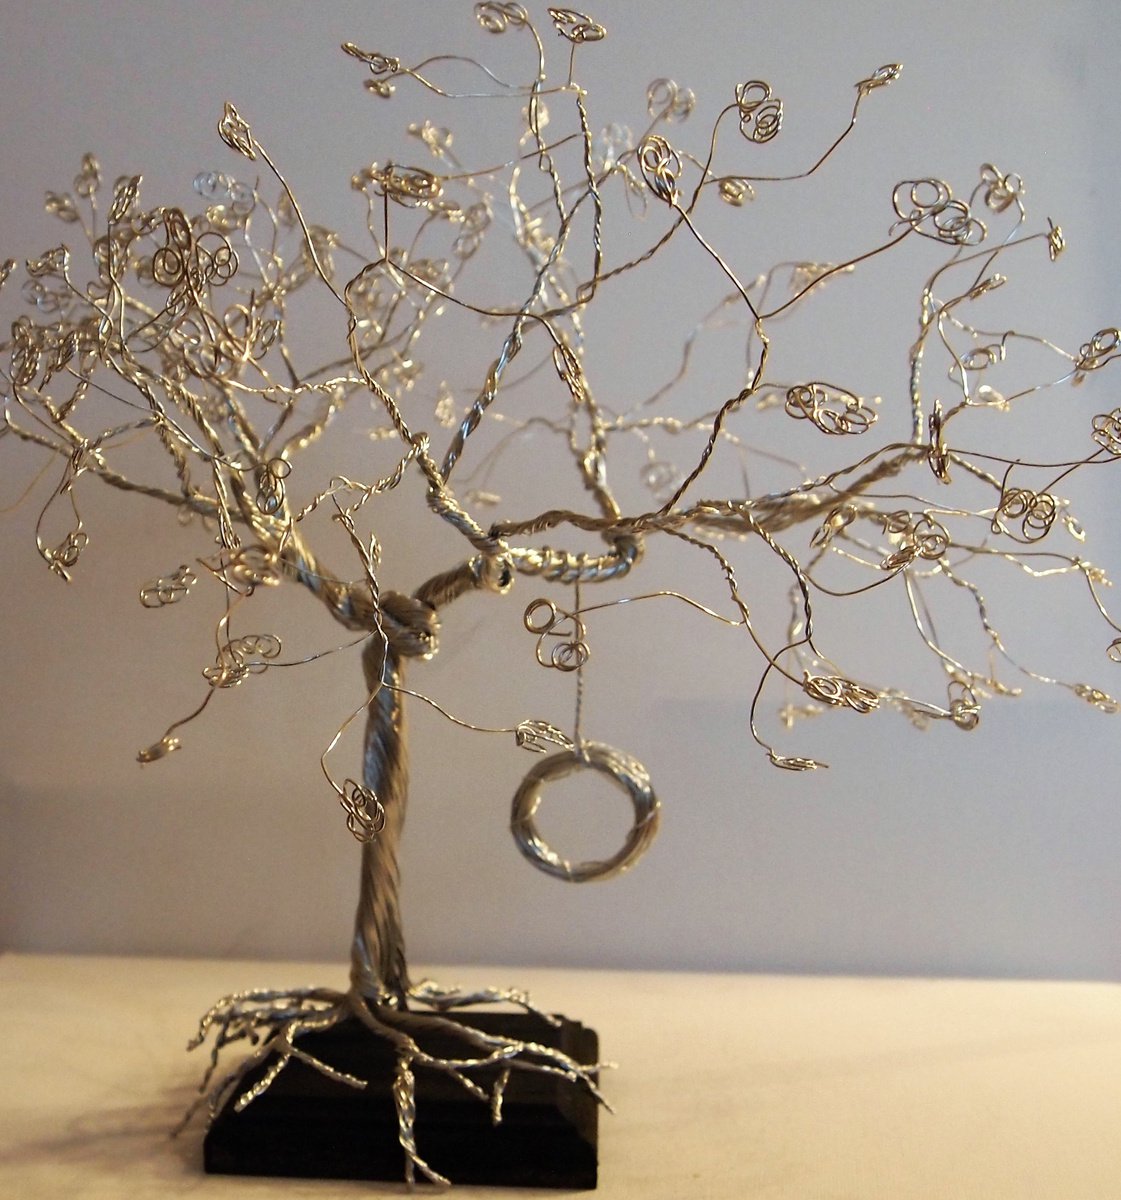 Silver Tree & swing by Steph Morgan